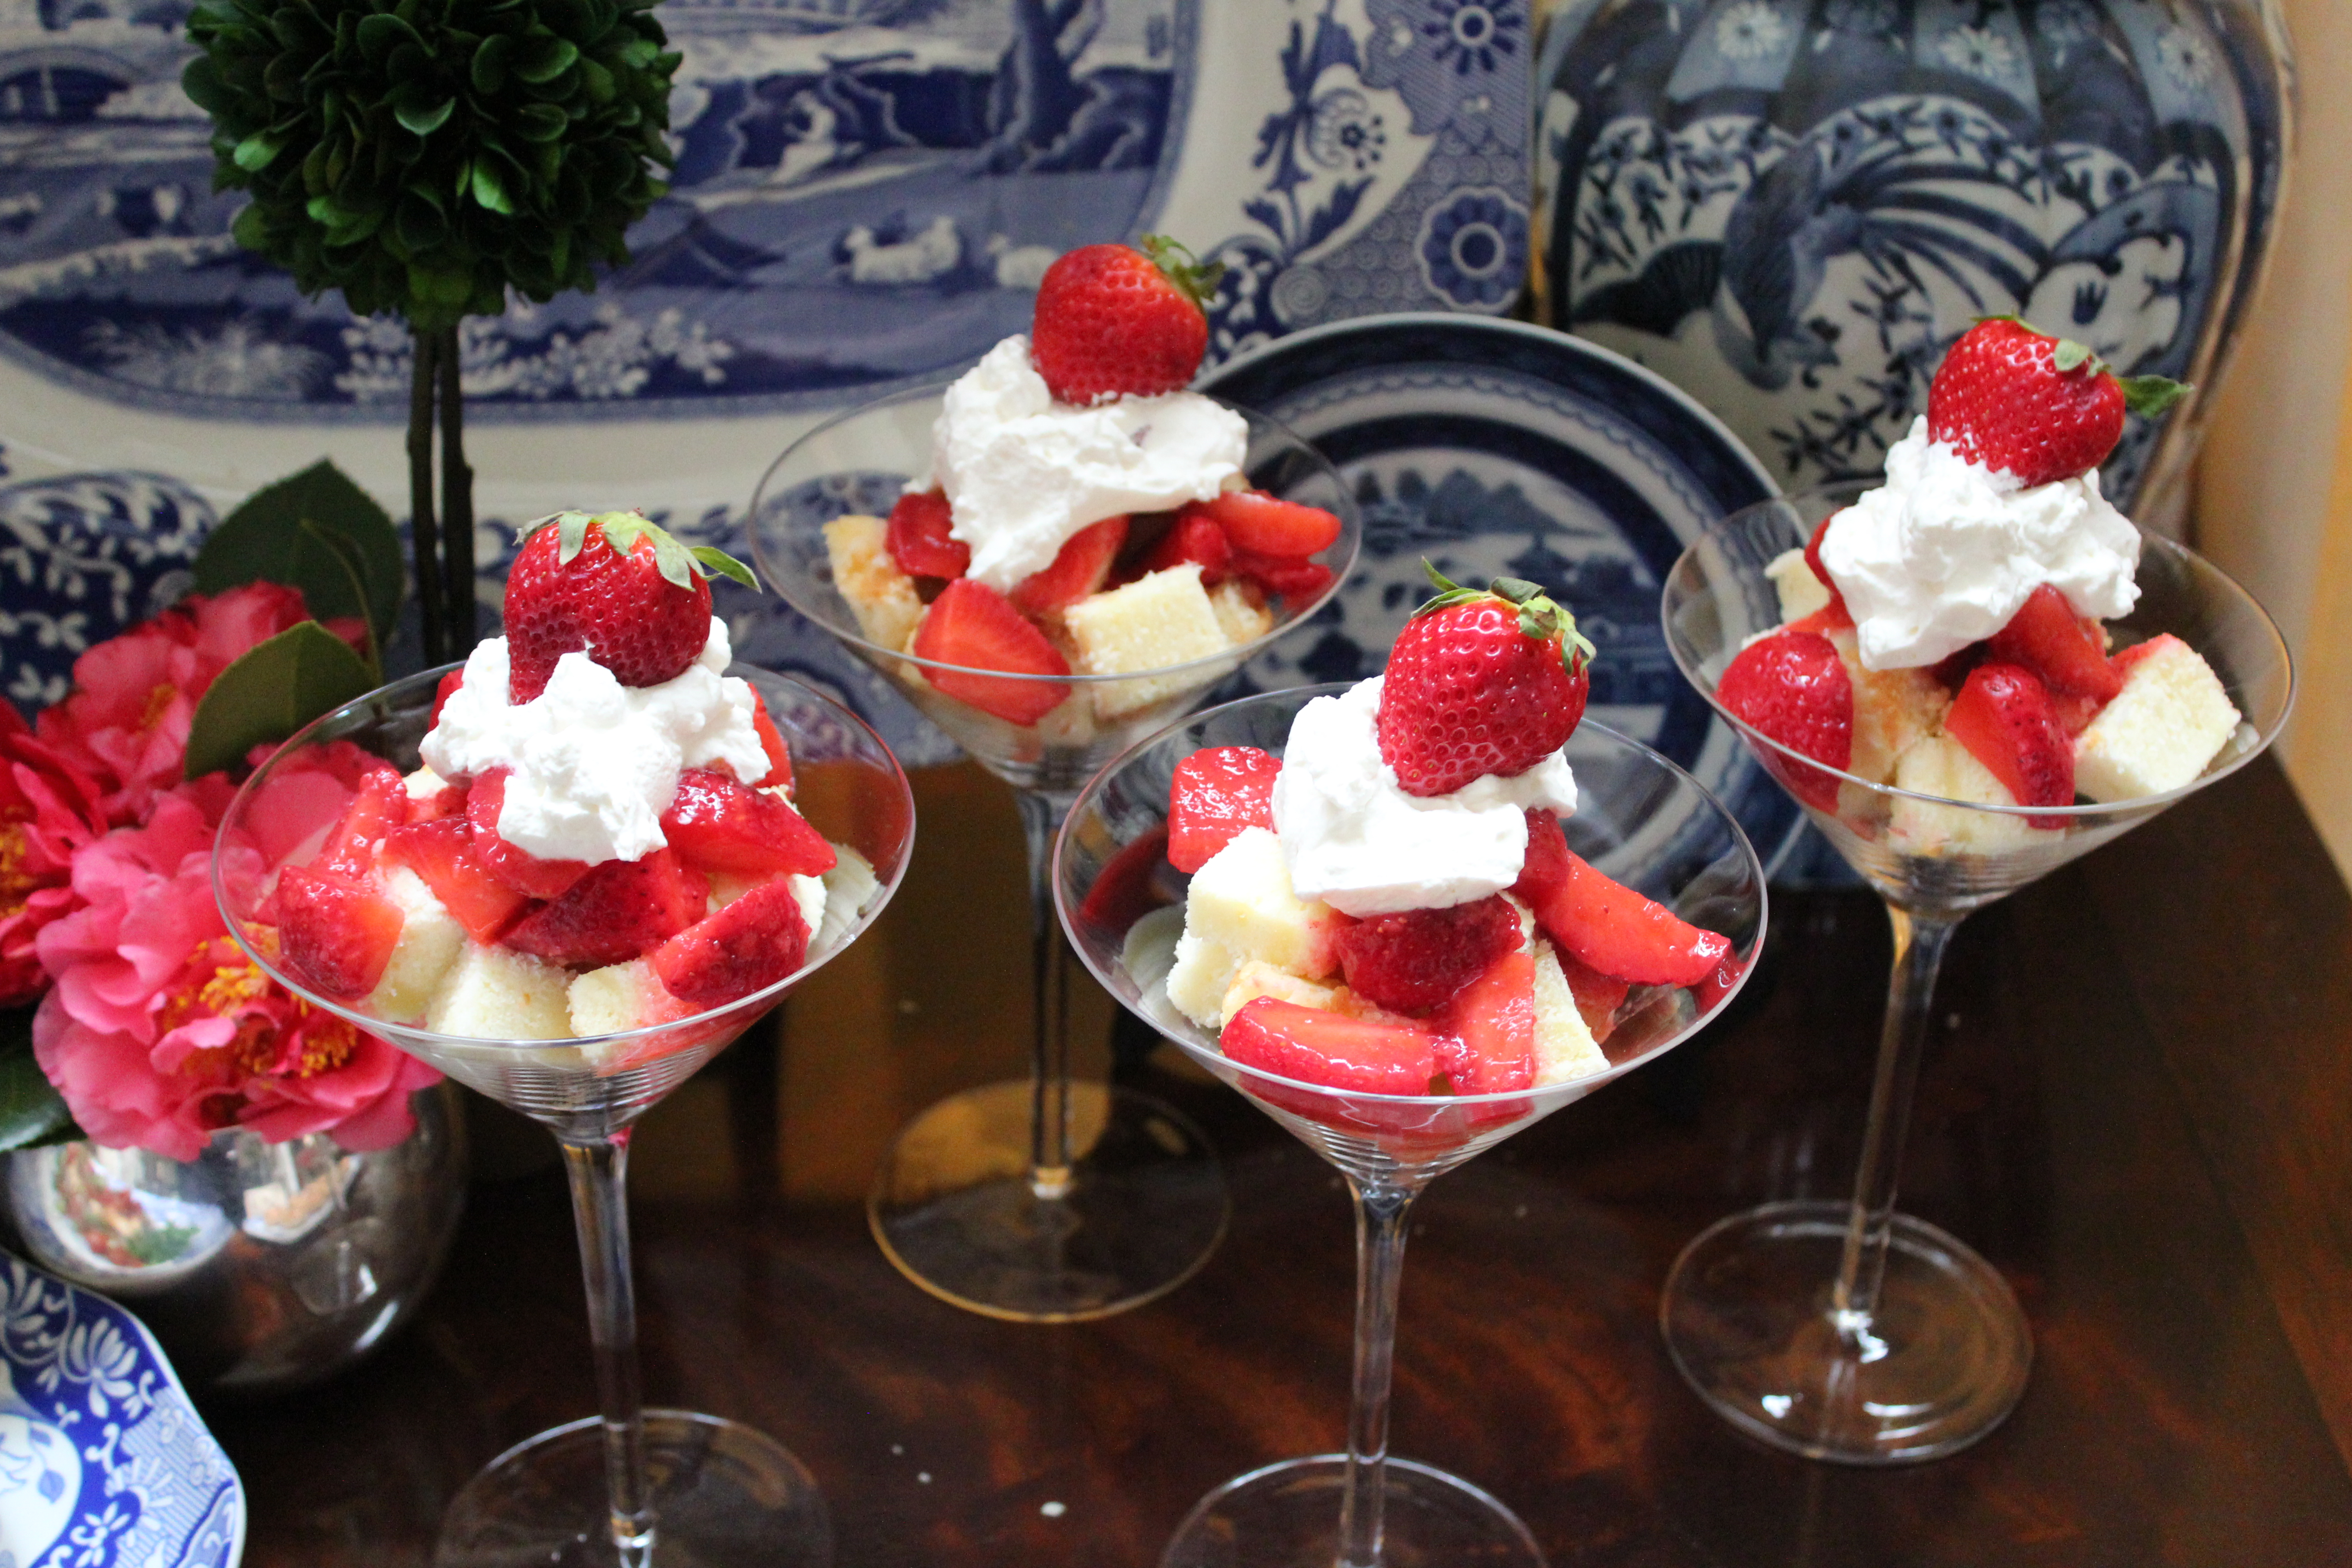 Serve attractive strawberry desserts, salads for spring entertaining